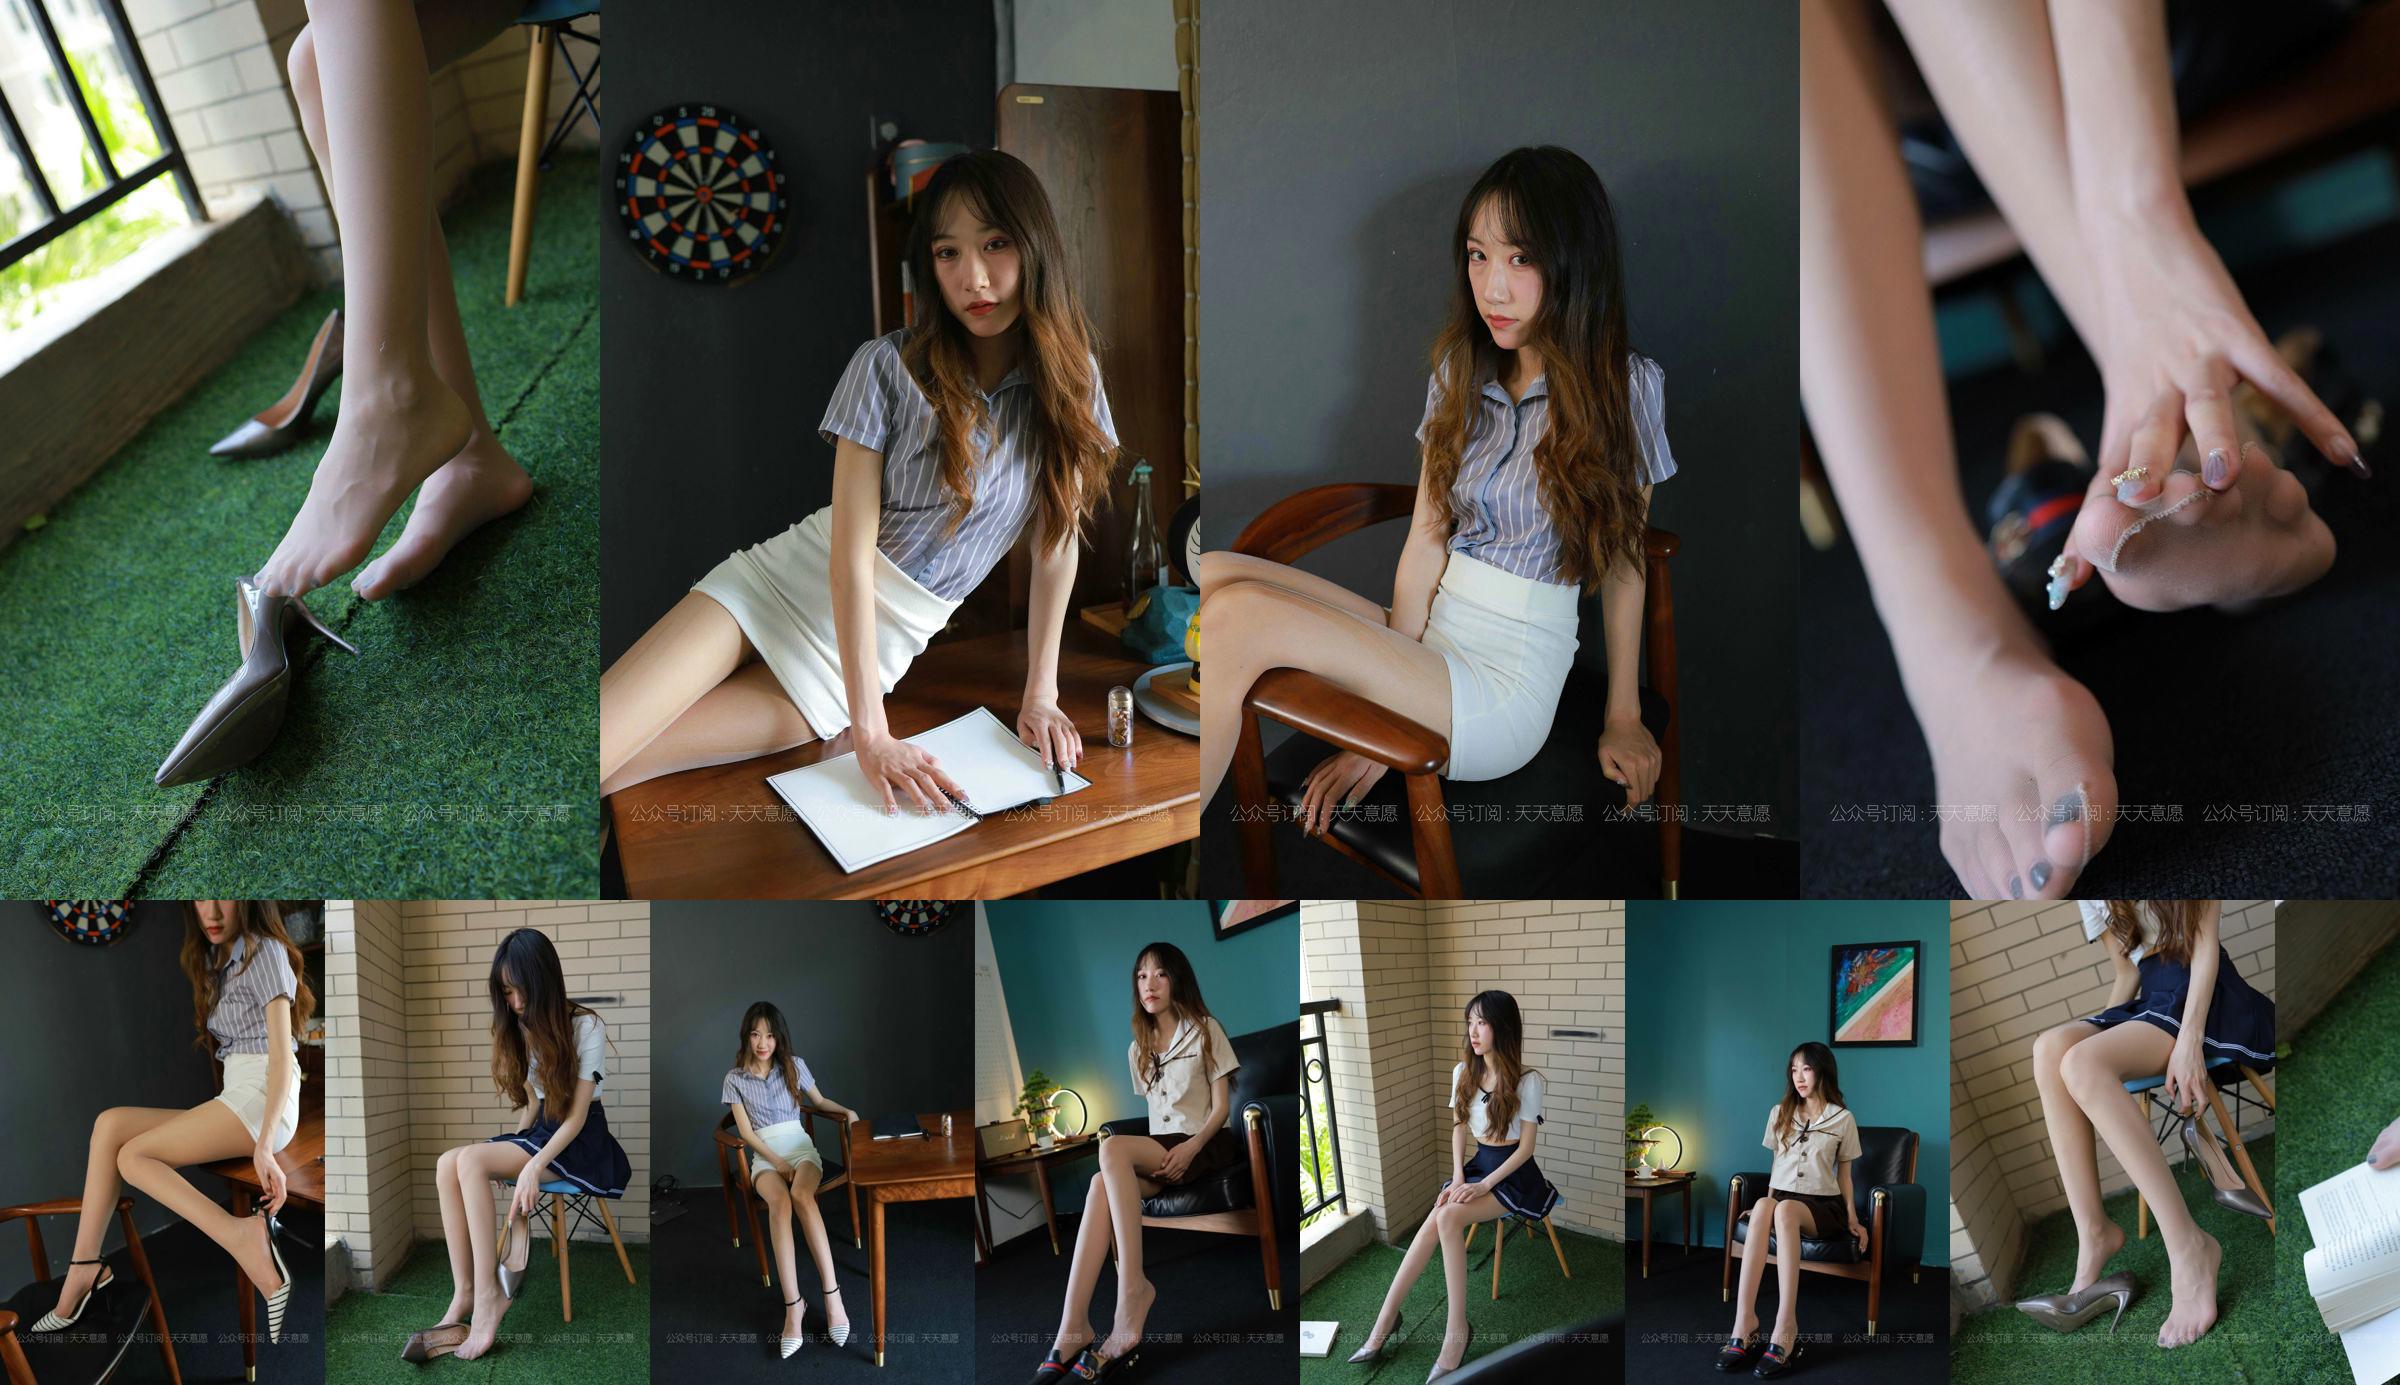 [IESS 奇思趣向] Model: Yiyi "Girl with Long Legs" No.6eb5cd Page 7